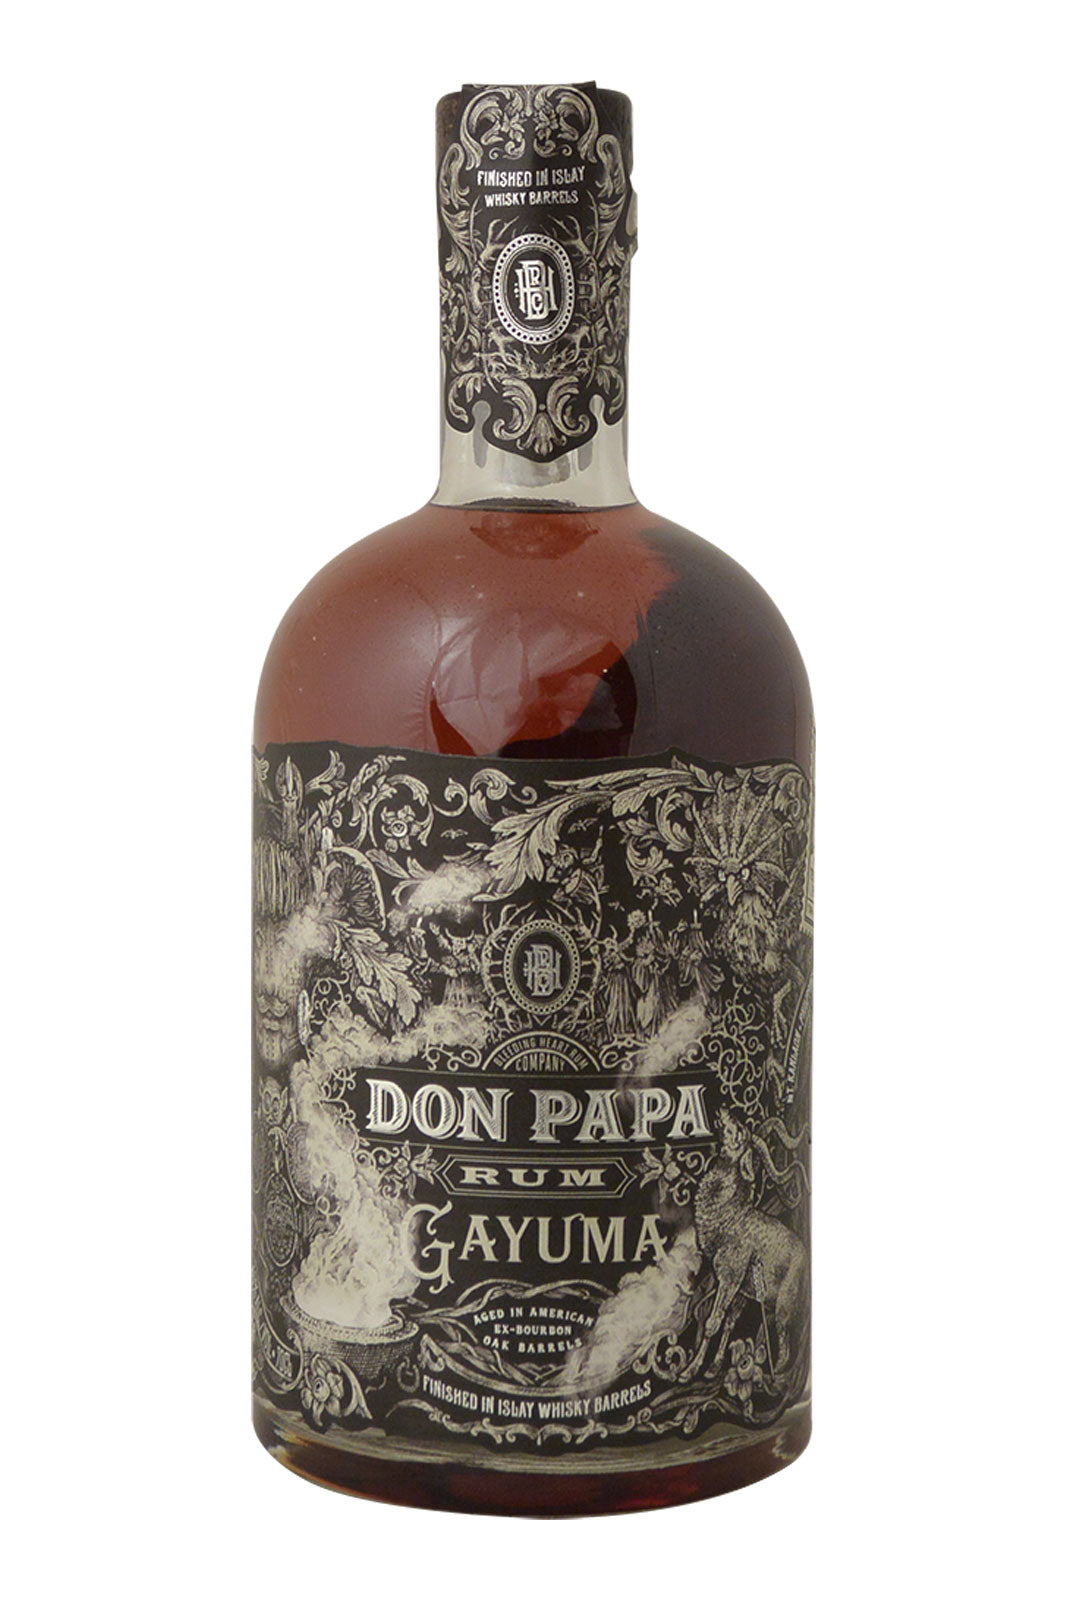 Don Papa Guyama